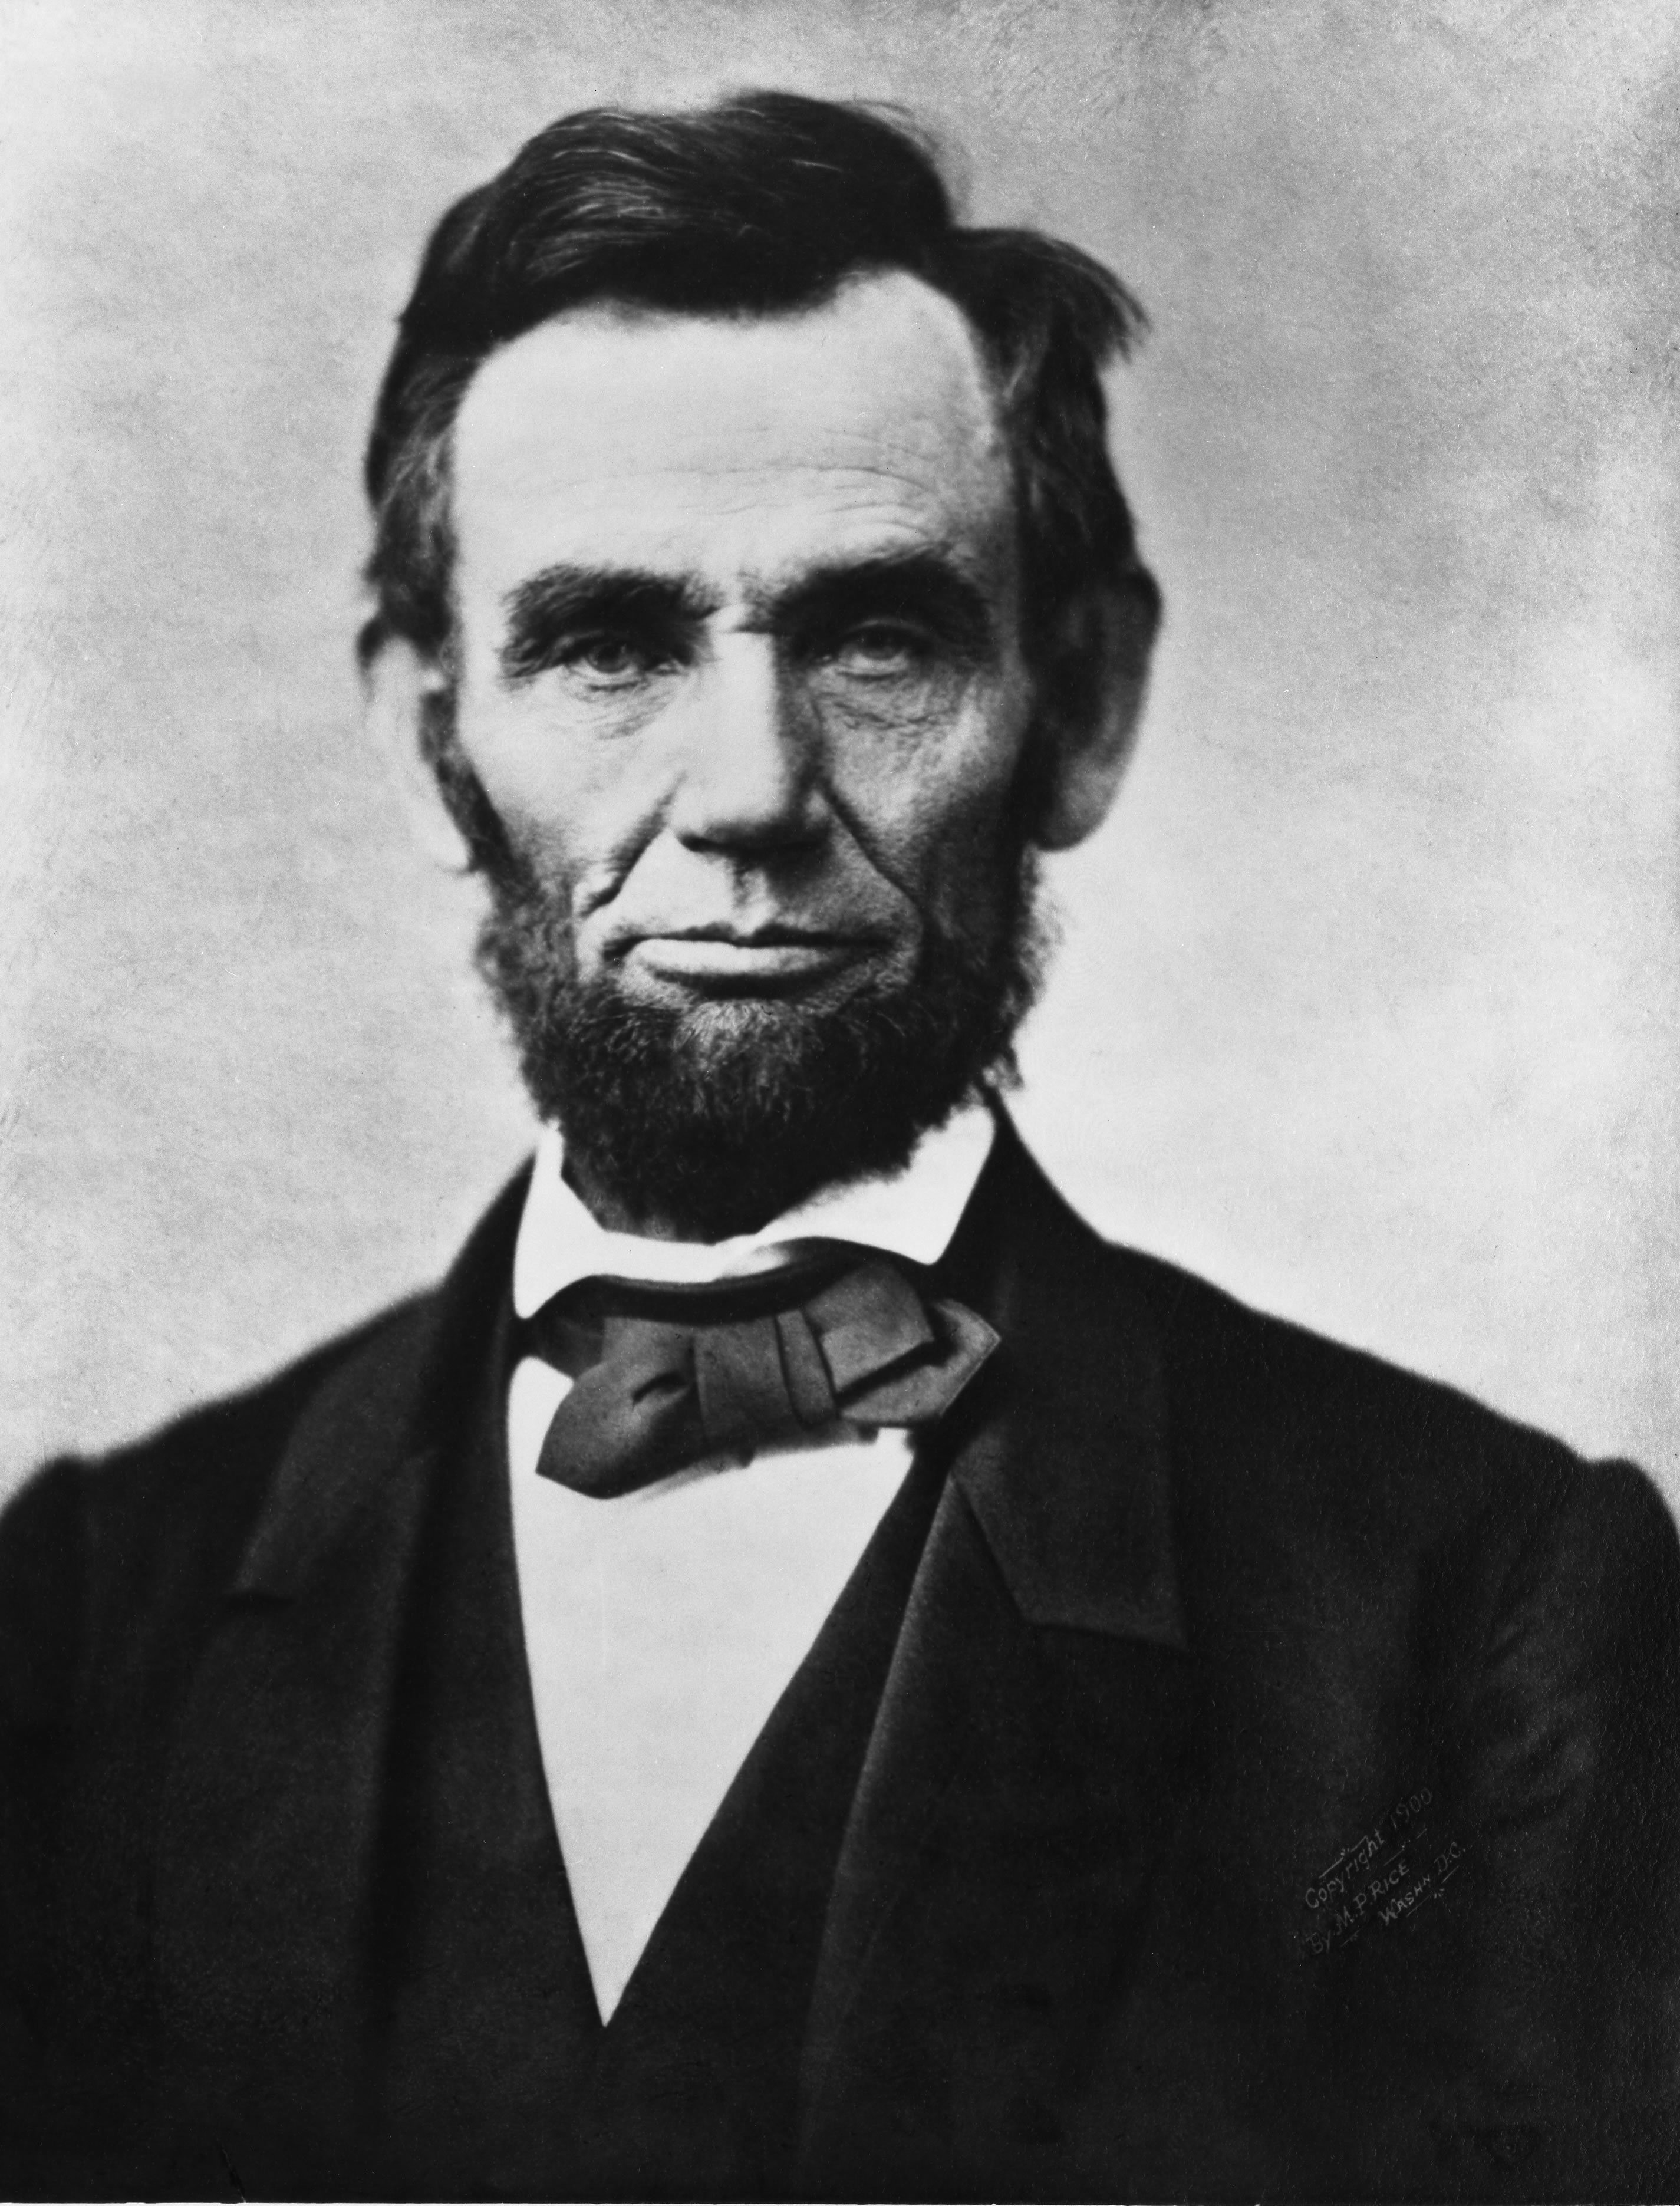 File:Abraham Lincoln head on shoulders photo portrait.jpg - Wikipedia